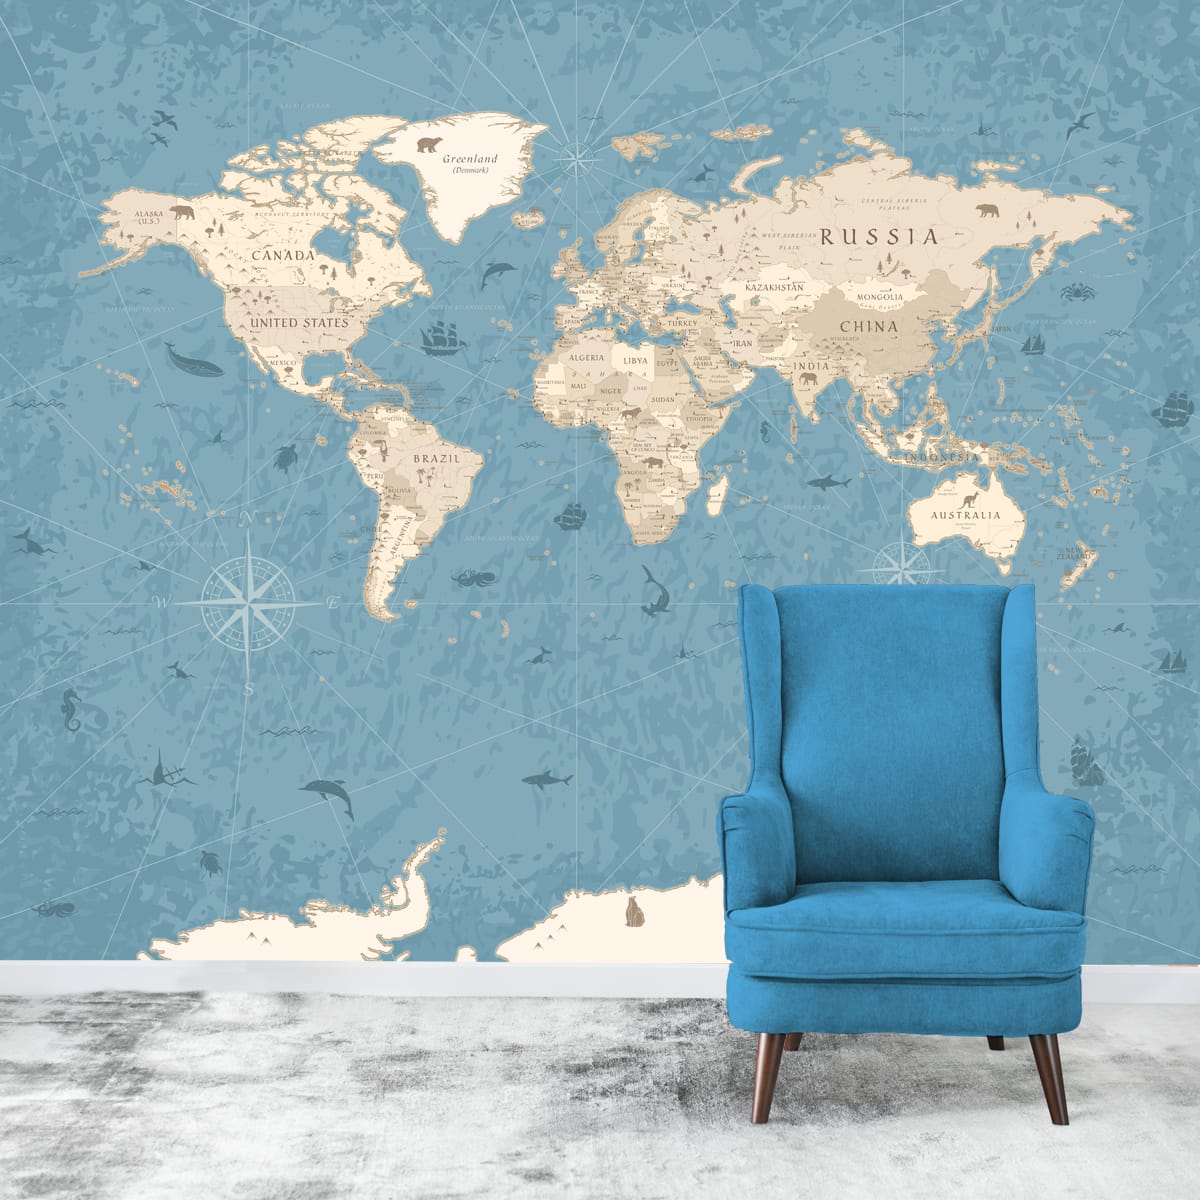 Vintage World Map Wallpaper for Walls, World Maps for Rooms, Blue & Beige